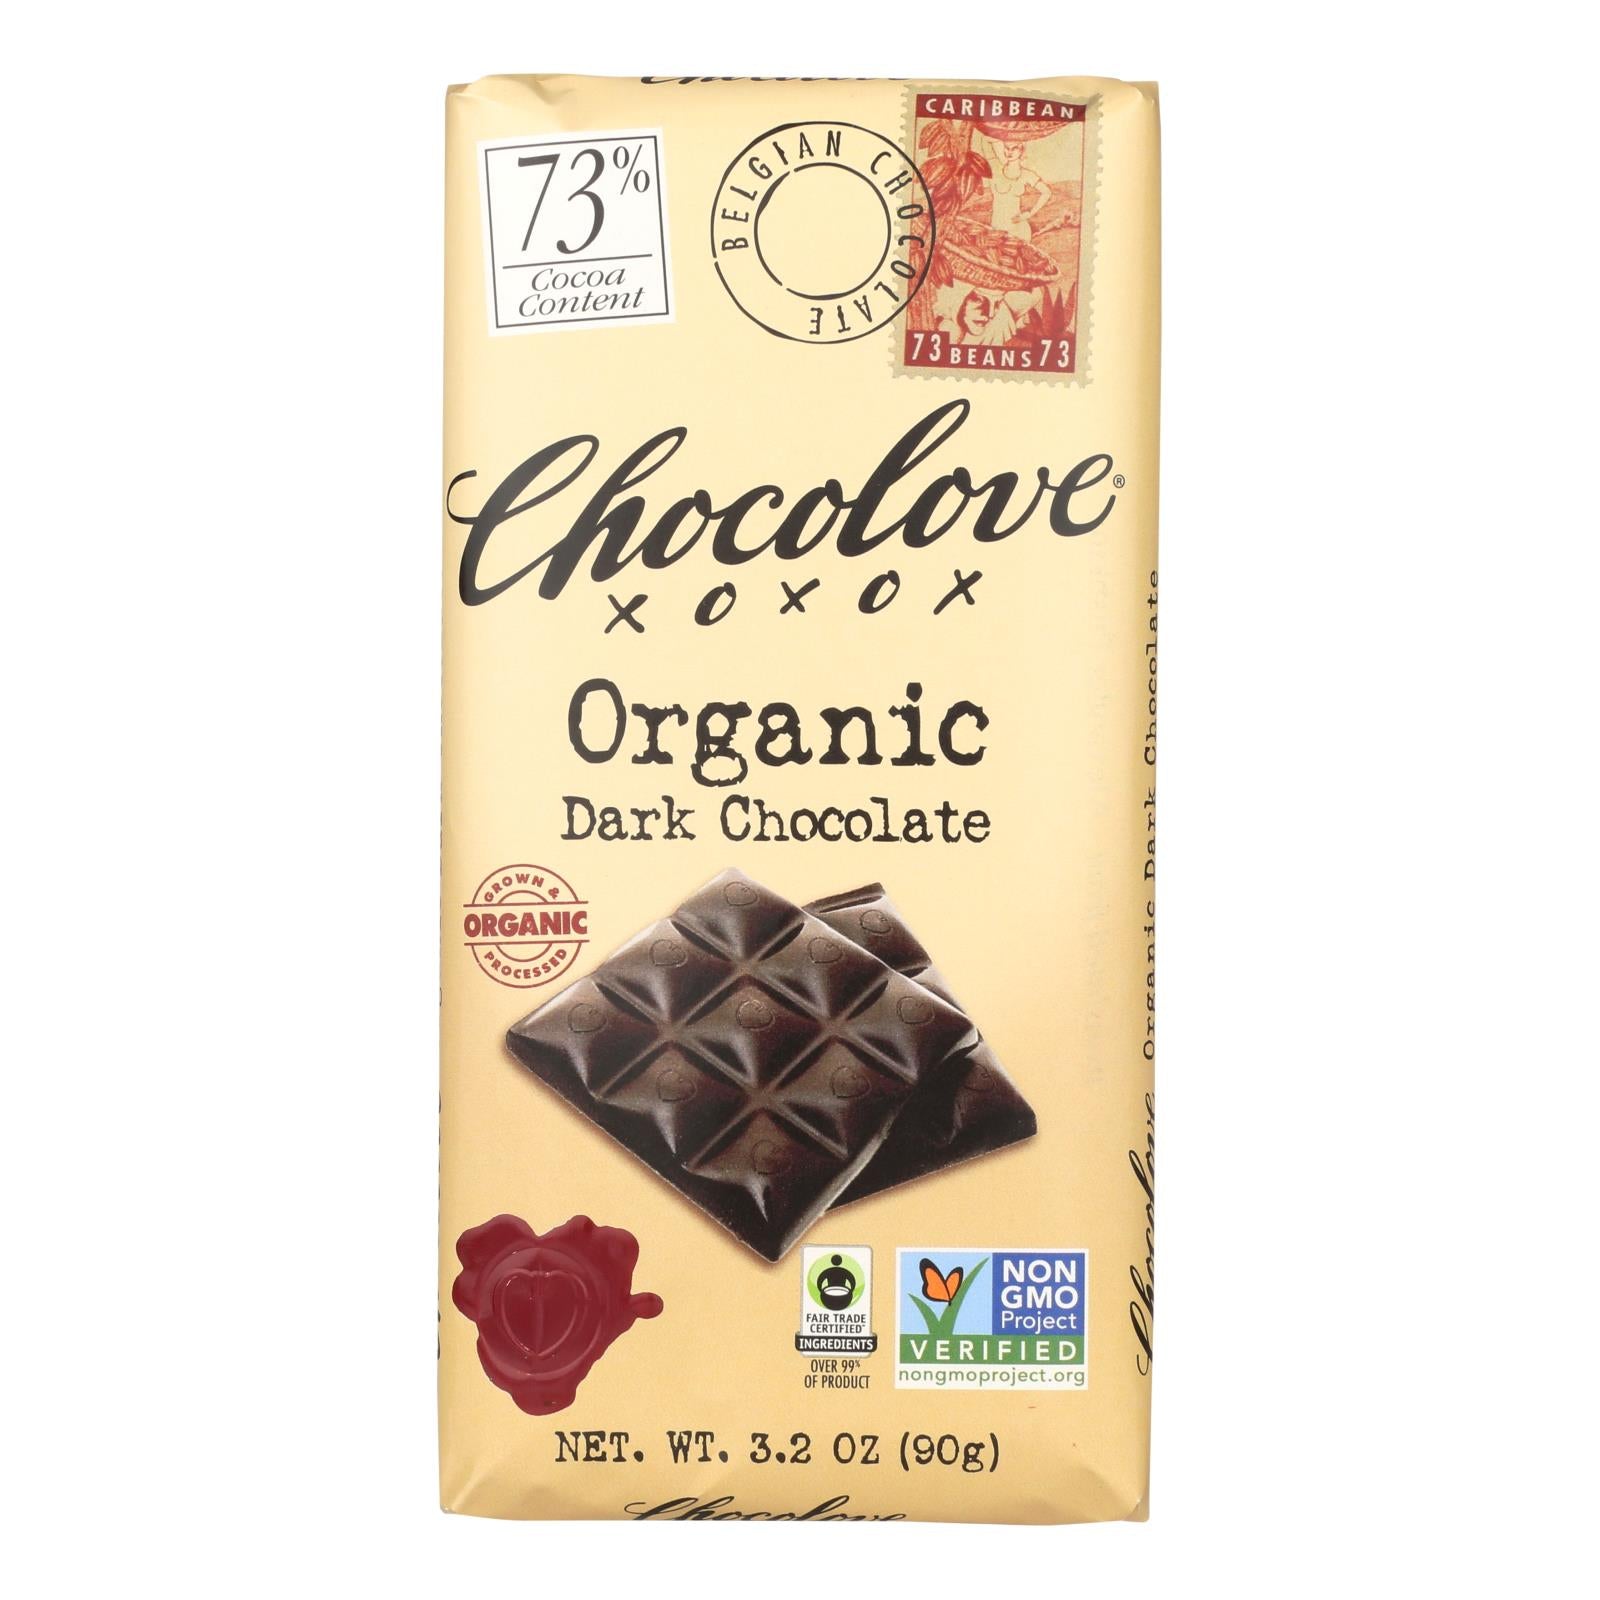 Chocolove Xoxox - Premium Chocolate Bar - Fair Trade Organic Dark Chocolate - 3.2 oz Bars - Case of 12